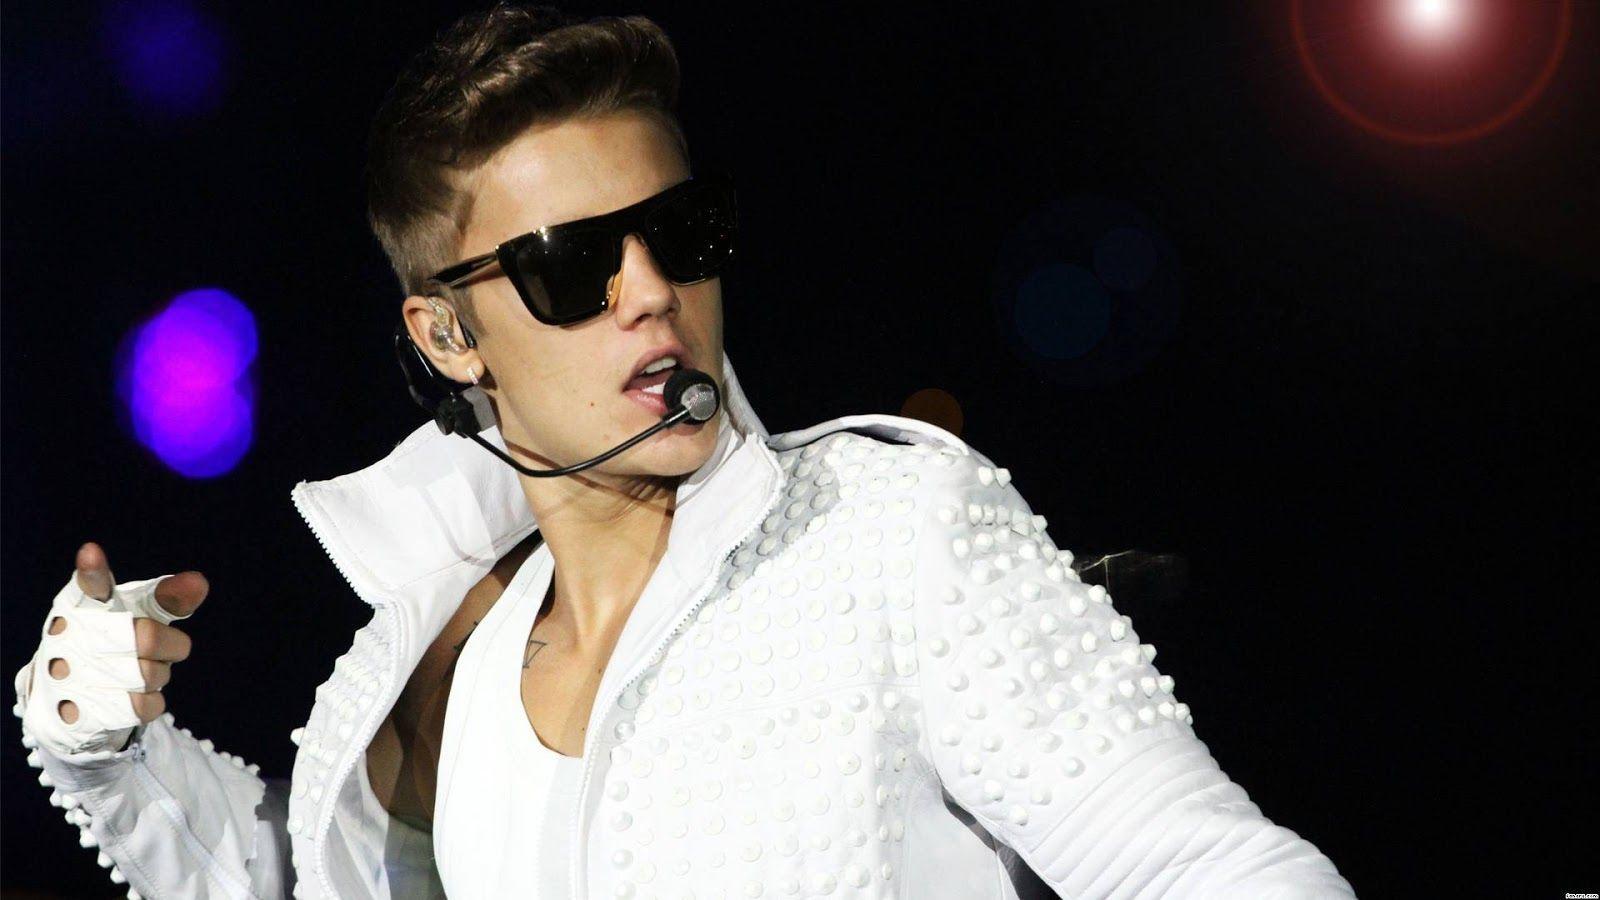 Justin Bieber Picture, Wallpaper, Photo, Image Download